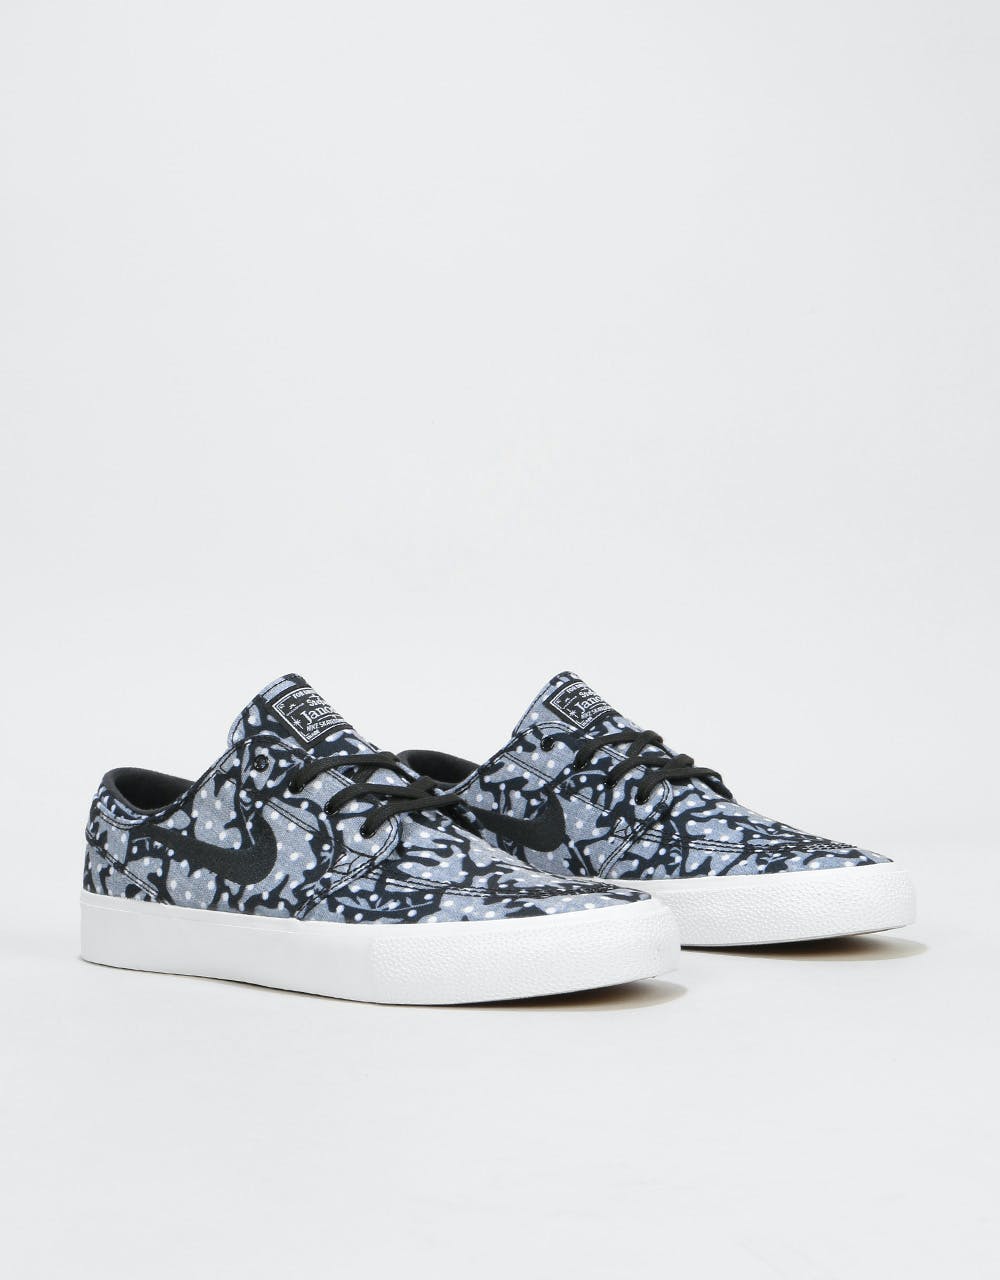 Nike SB Zoom Janoski RM Canvas Skate Shoes - Black/White-Vast Grey-Gum